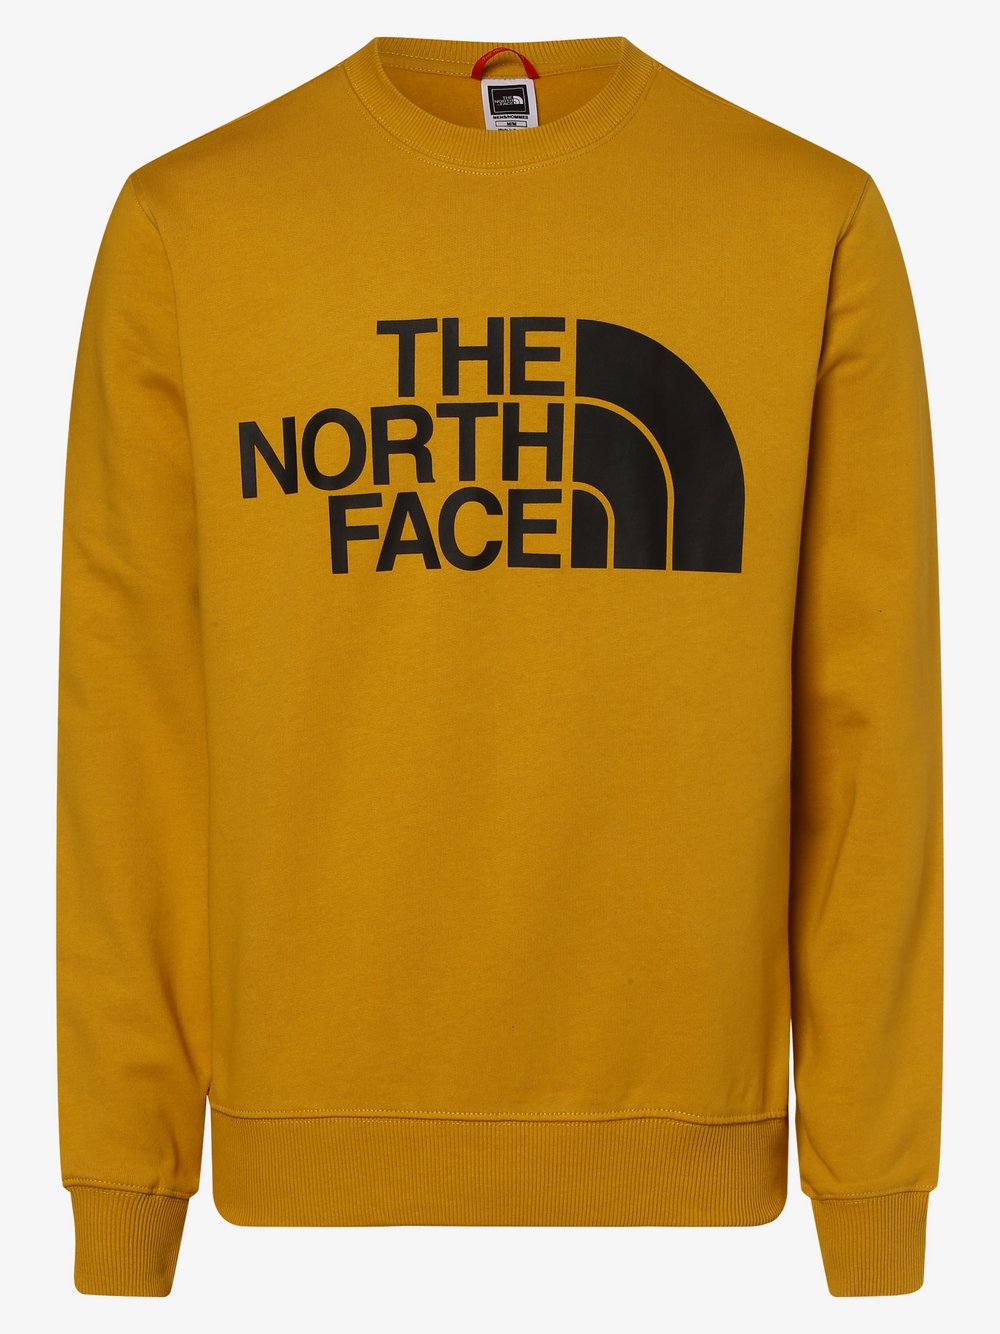 The North Face - Męska bluza nierozpinana, żółty